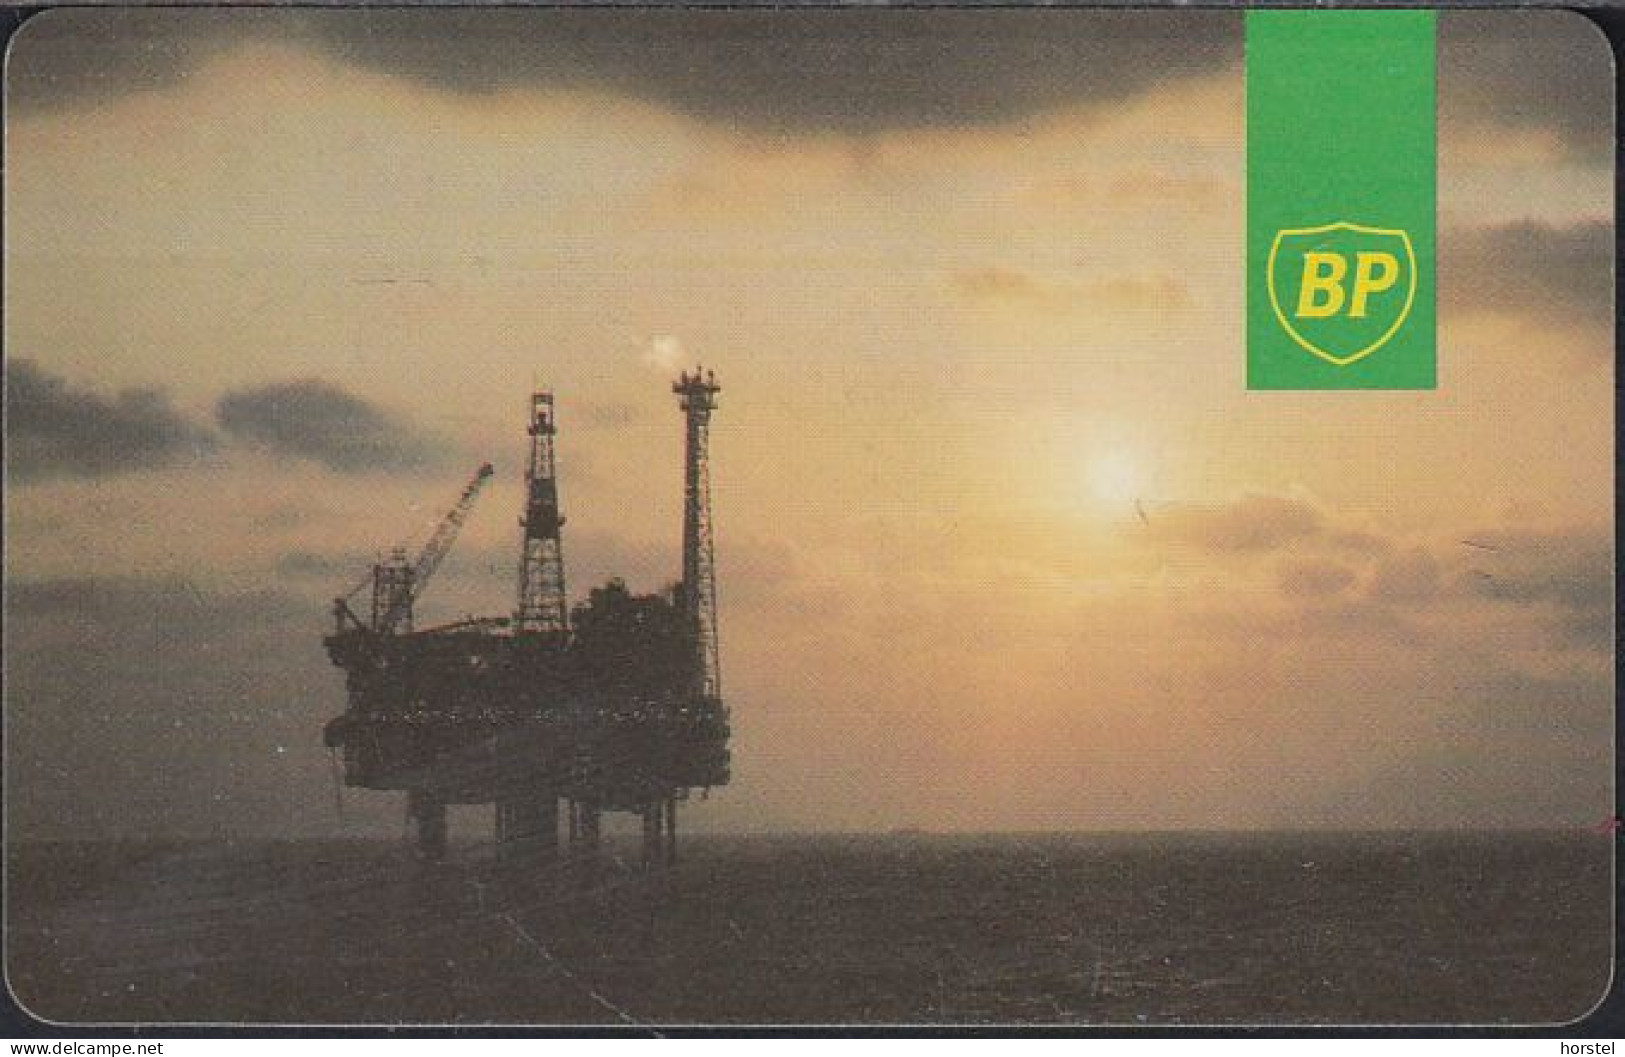 UK - GB-OIL-AUT-0001 Payphone IPL Autelca - BP - Oil Bohrinsel - 20 Units - Mint - [ 2] Plataformas Petroleras